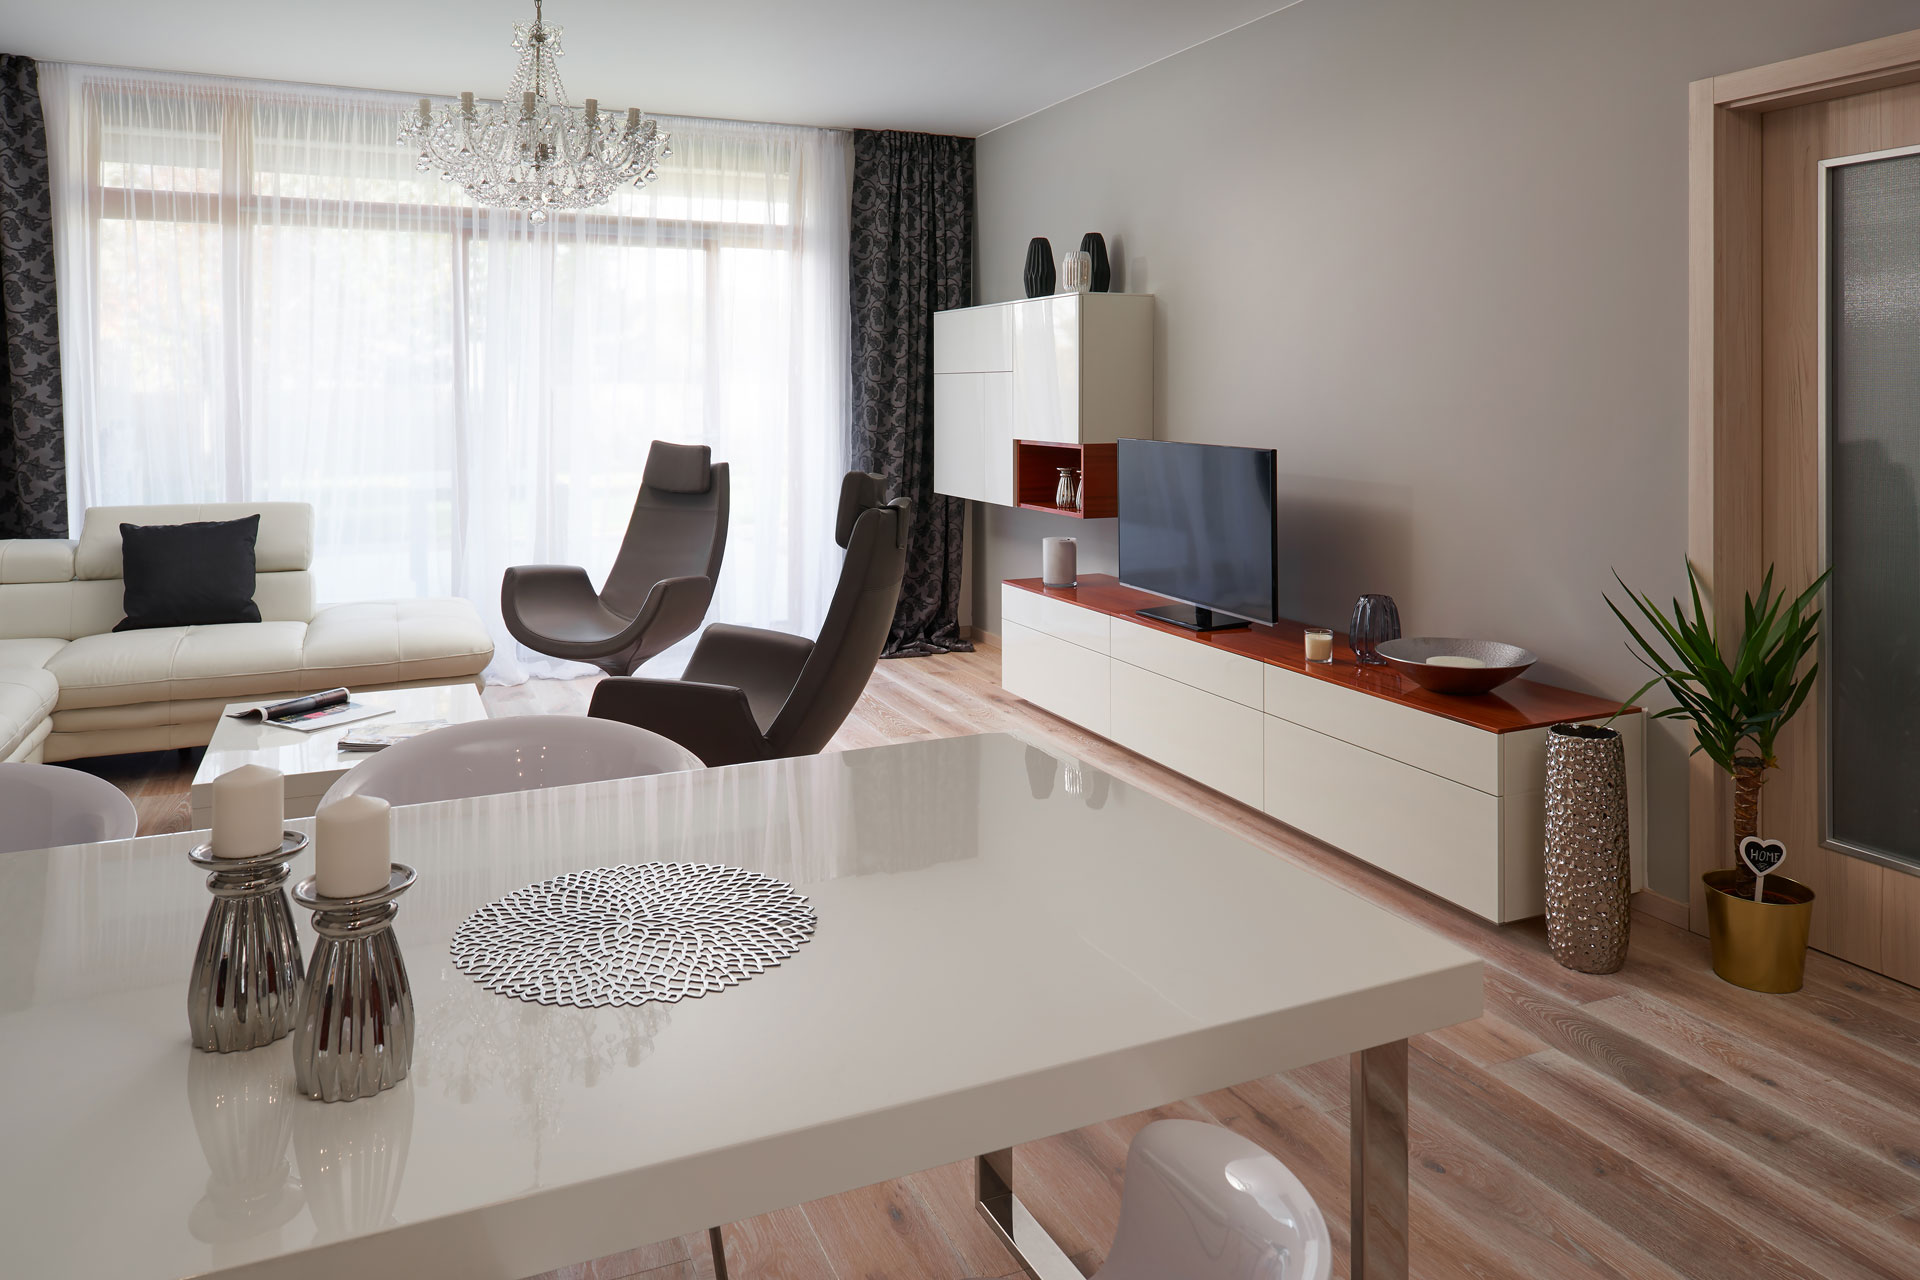 Hanák furniture Realization of modern interior Tineo